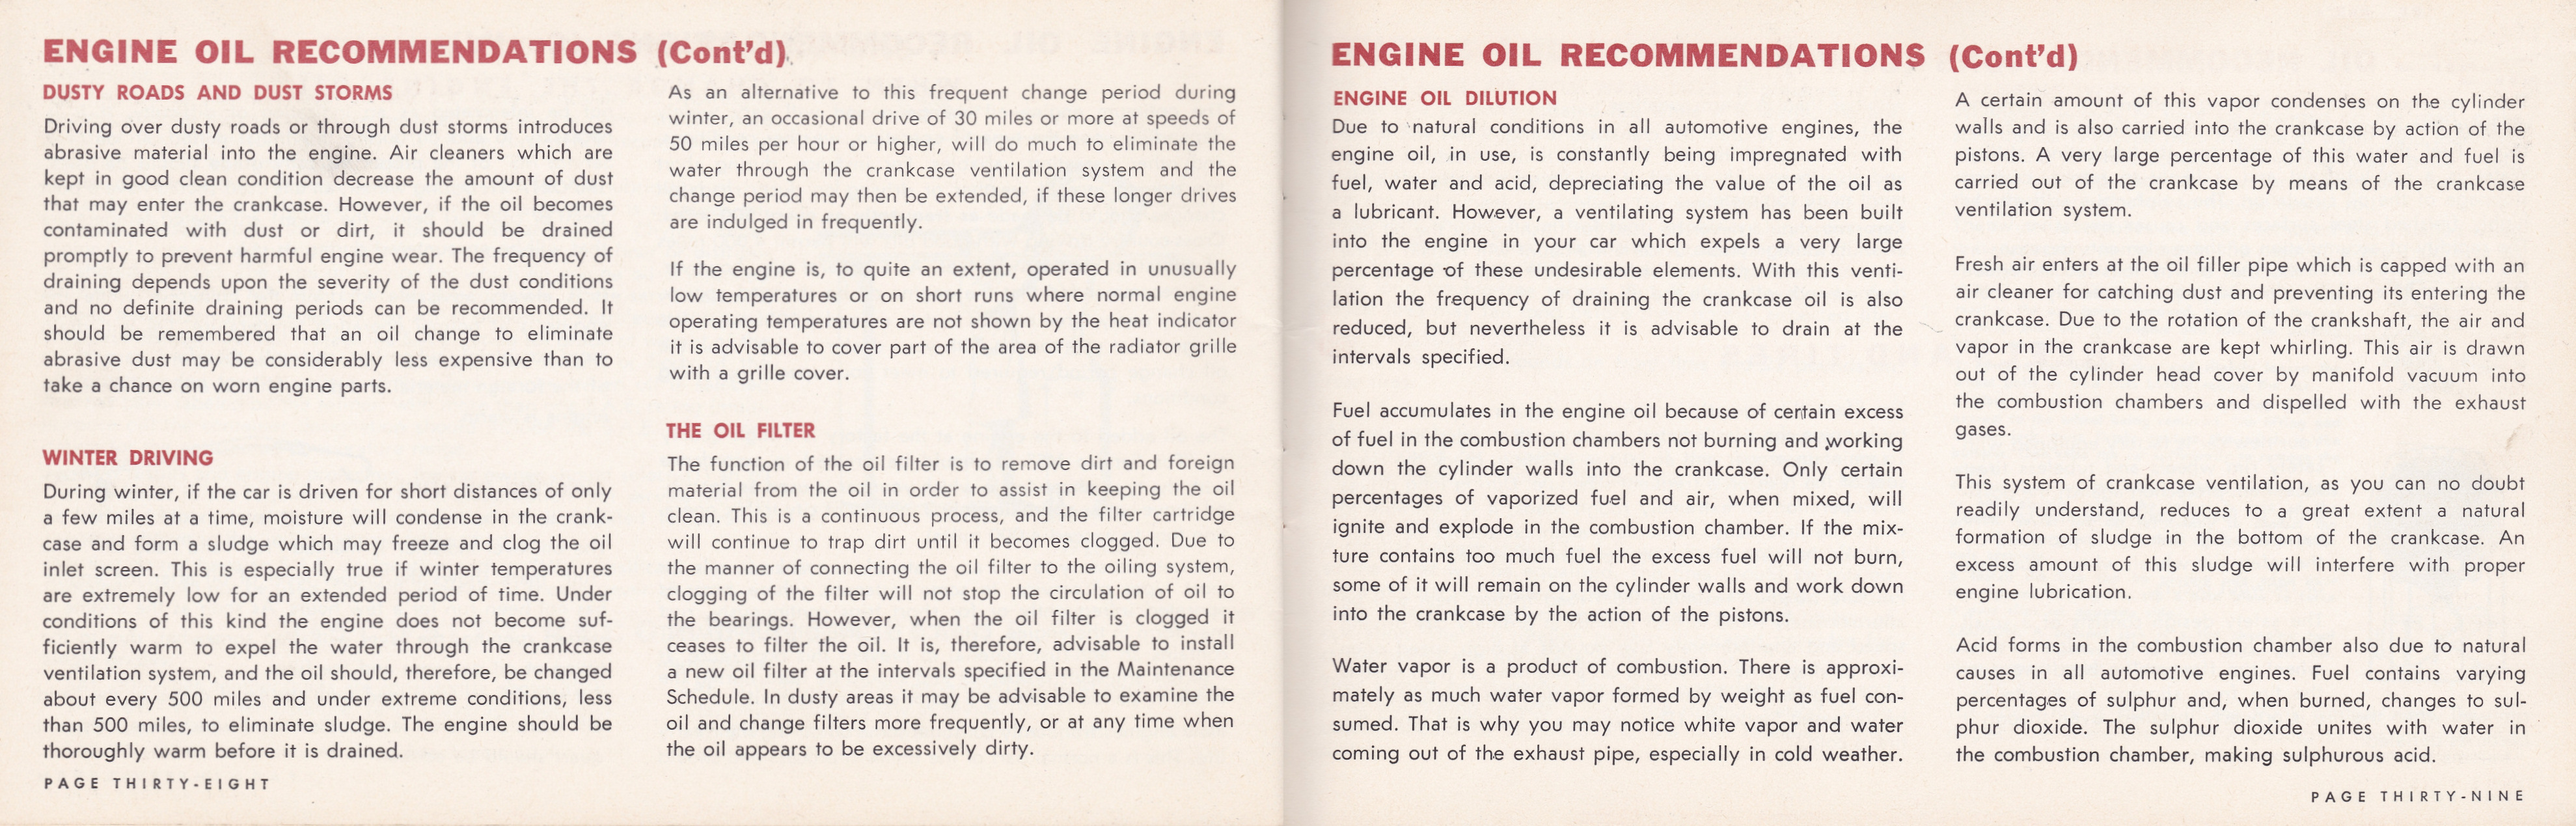 1964_Chrysler_Owners_Manual_Cdn-38-39